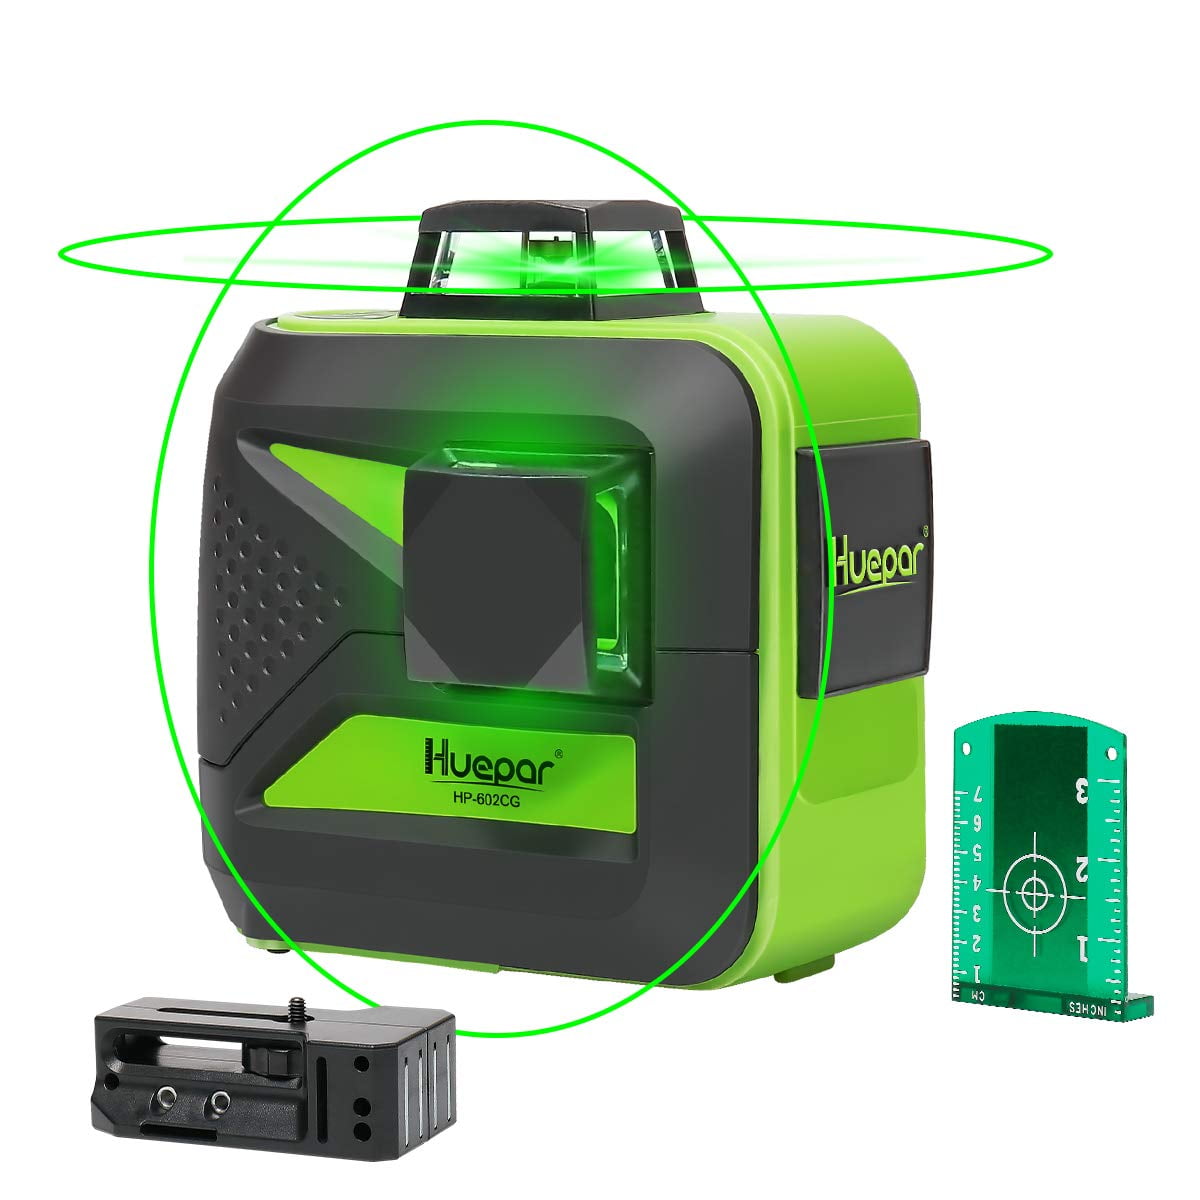 Huepar 2 x 360° Cross Line Laser Level Green Beam Self-Leveling Laser  Leveler Tools with Pulse Mode, Bluetooth, Li-ion Battery & Magnetic Bracket  P02CG 